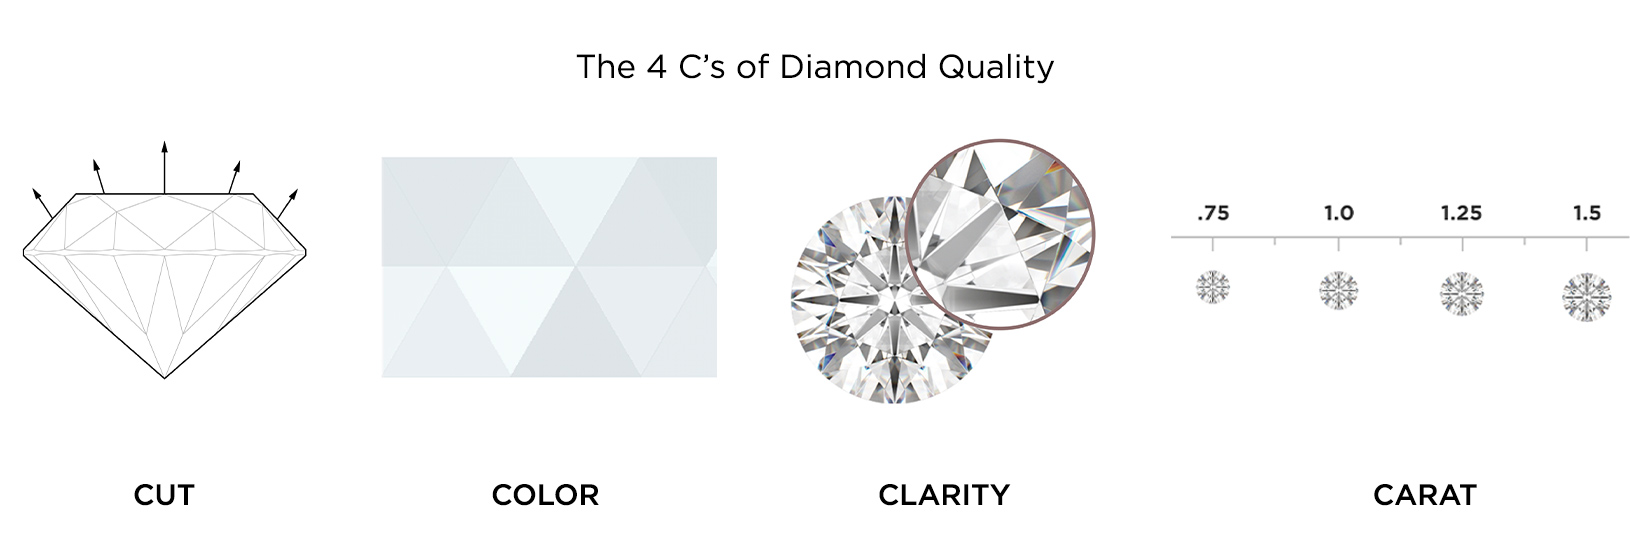 The 4Cs of diamond quality